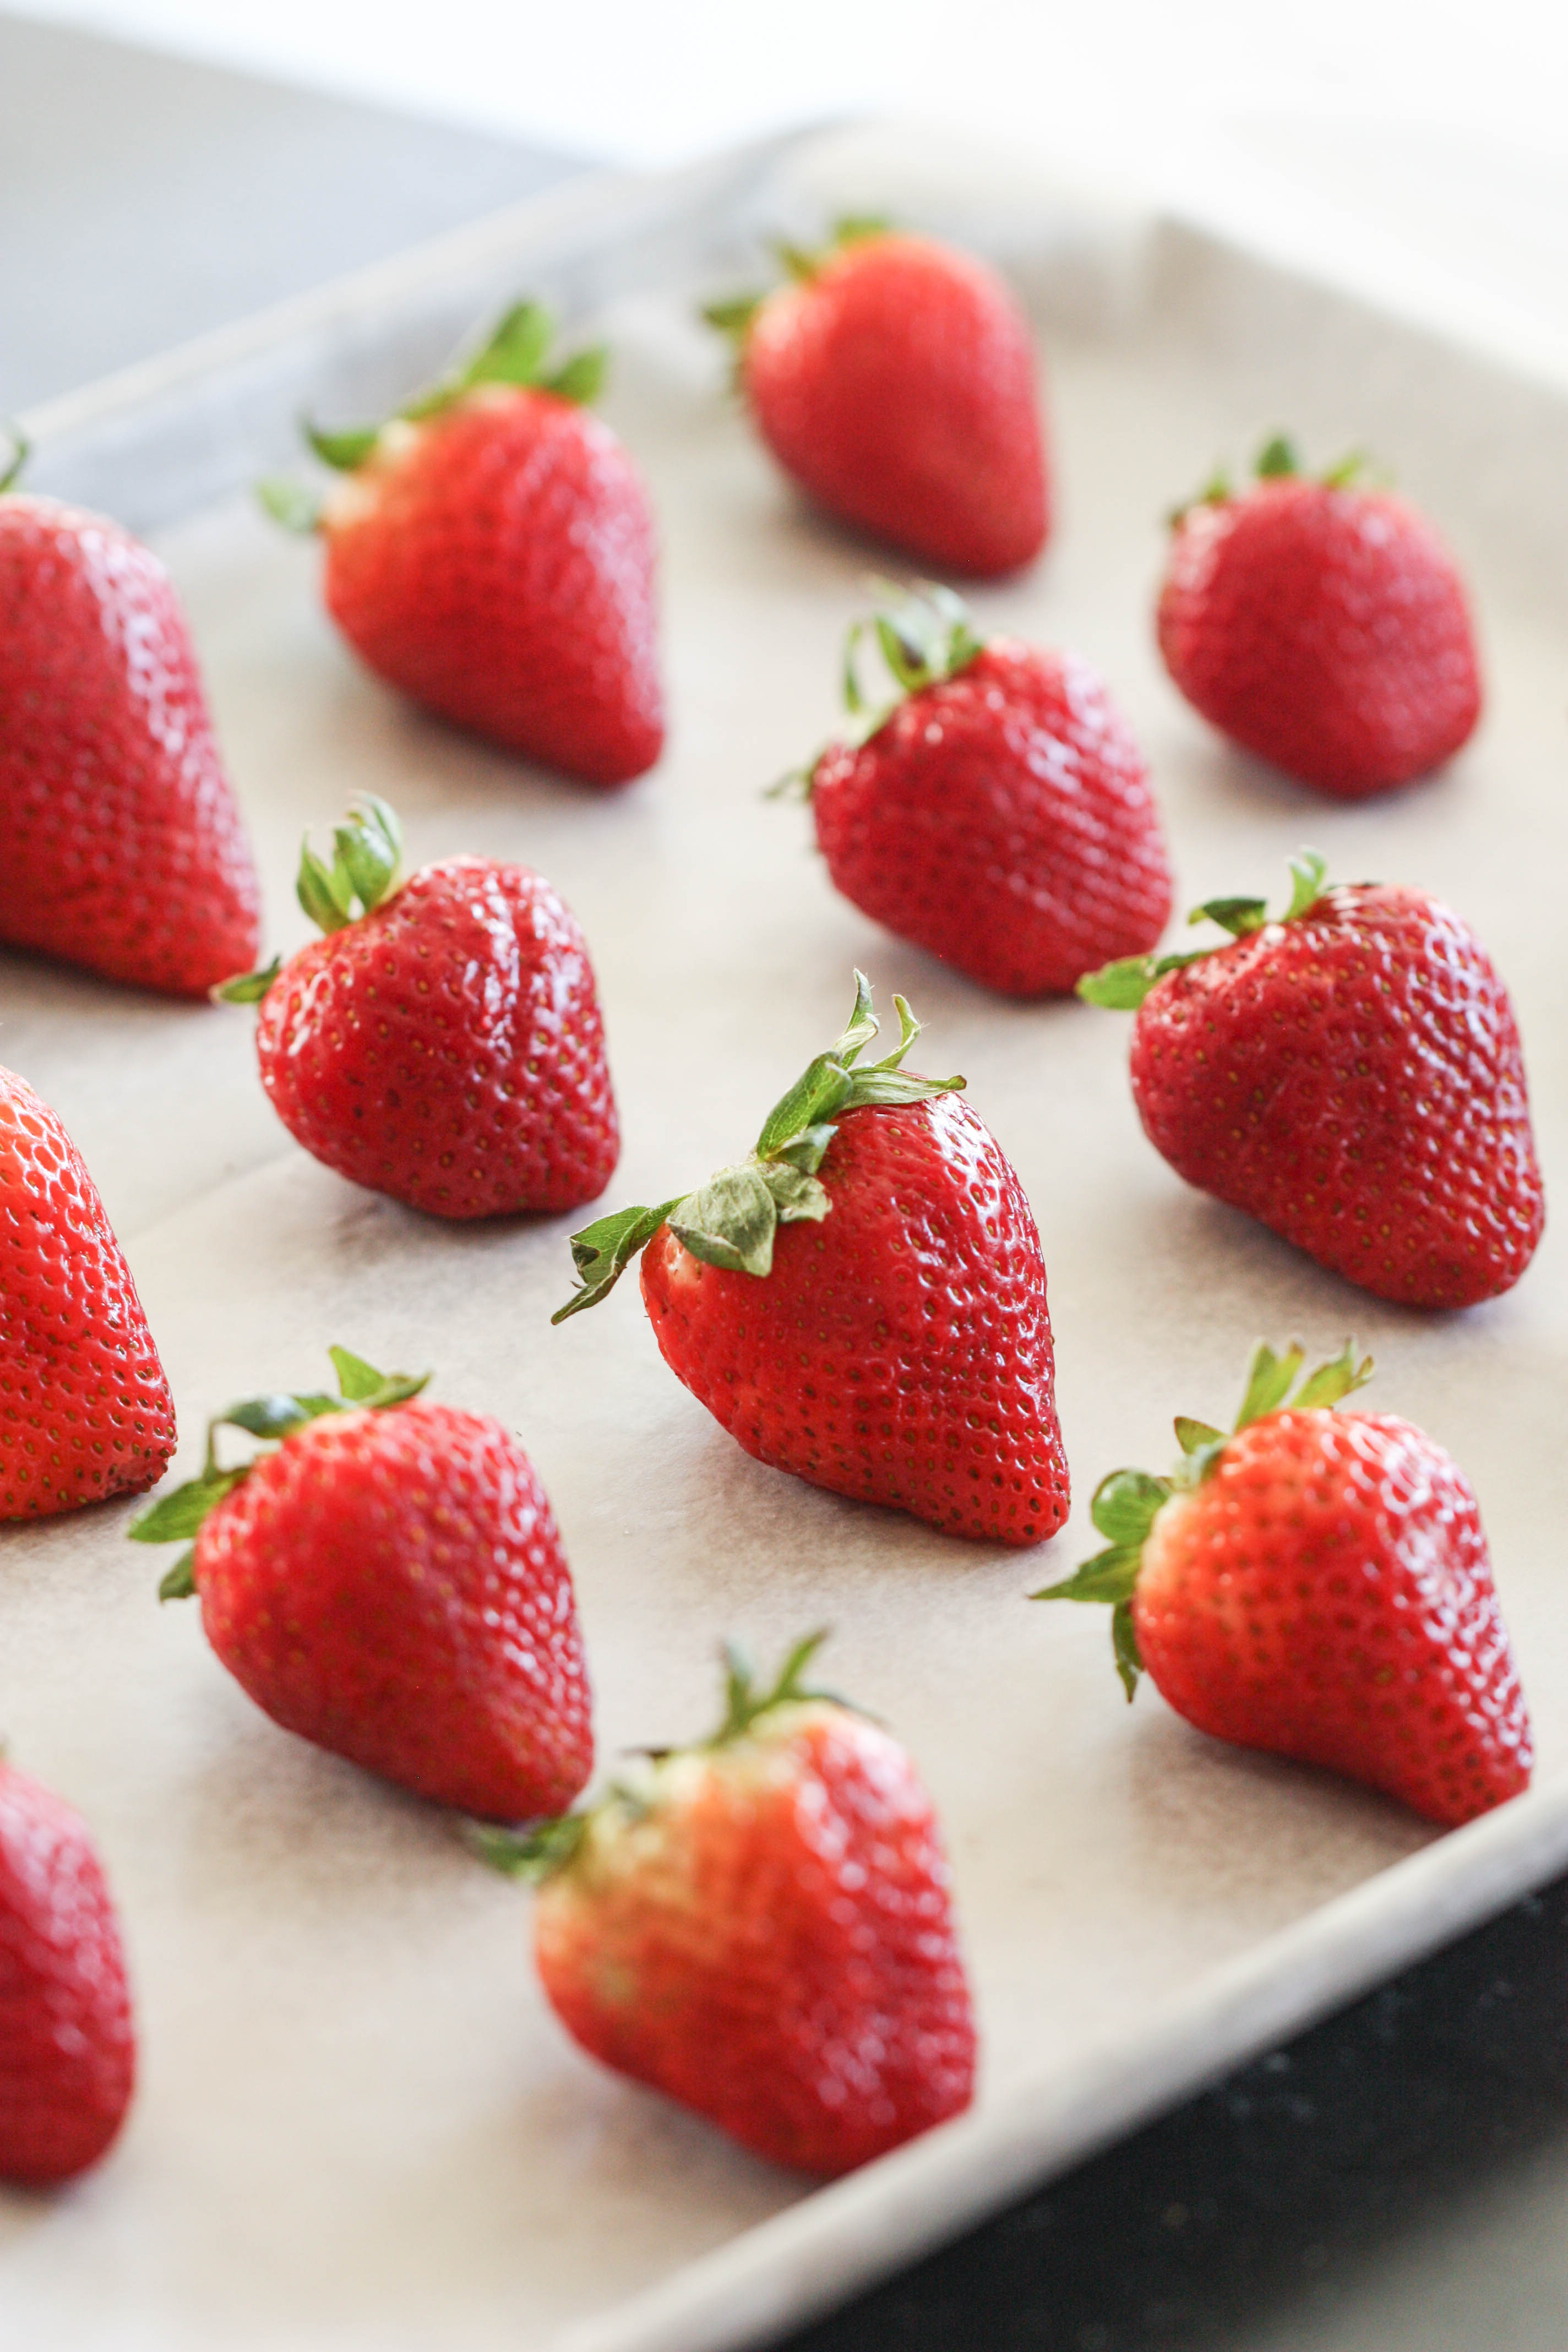 Sheet pan with fresh strawberries